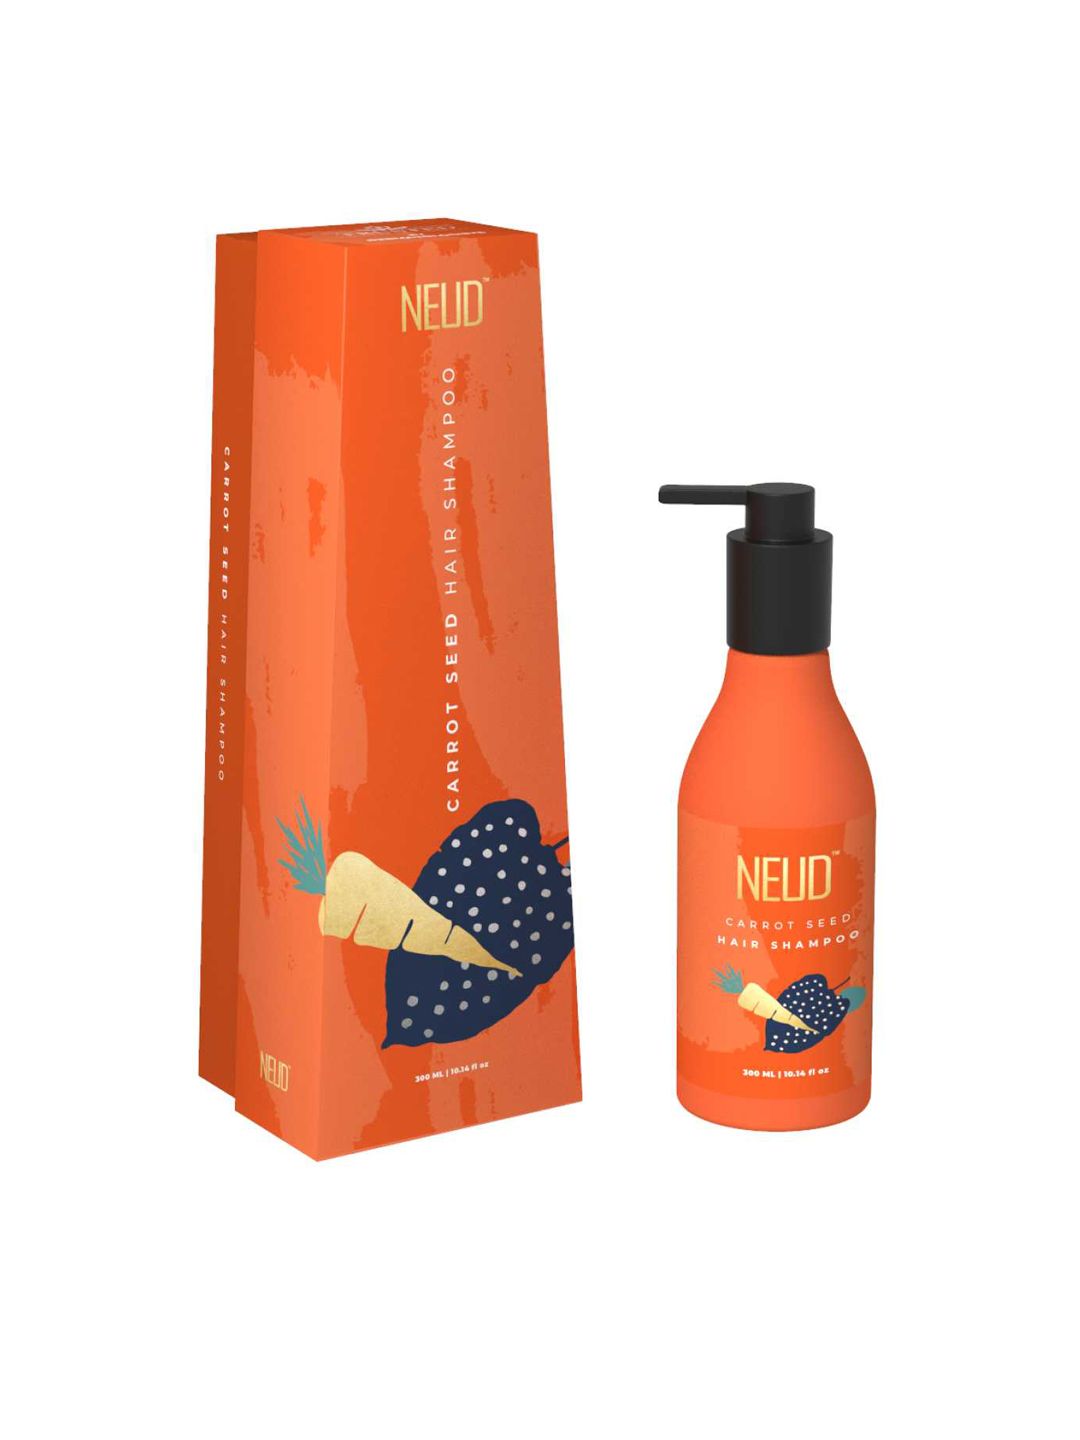 NEUD Carrot Seed Premium Shampoo 300ml Price in India